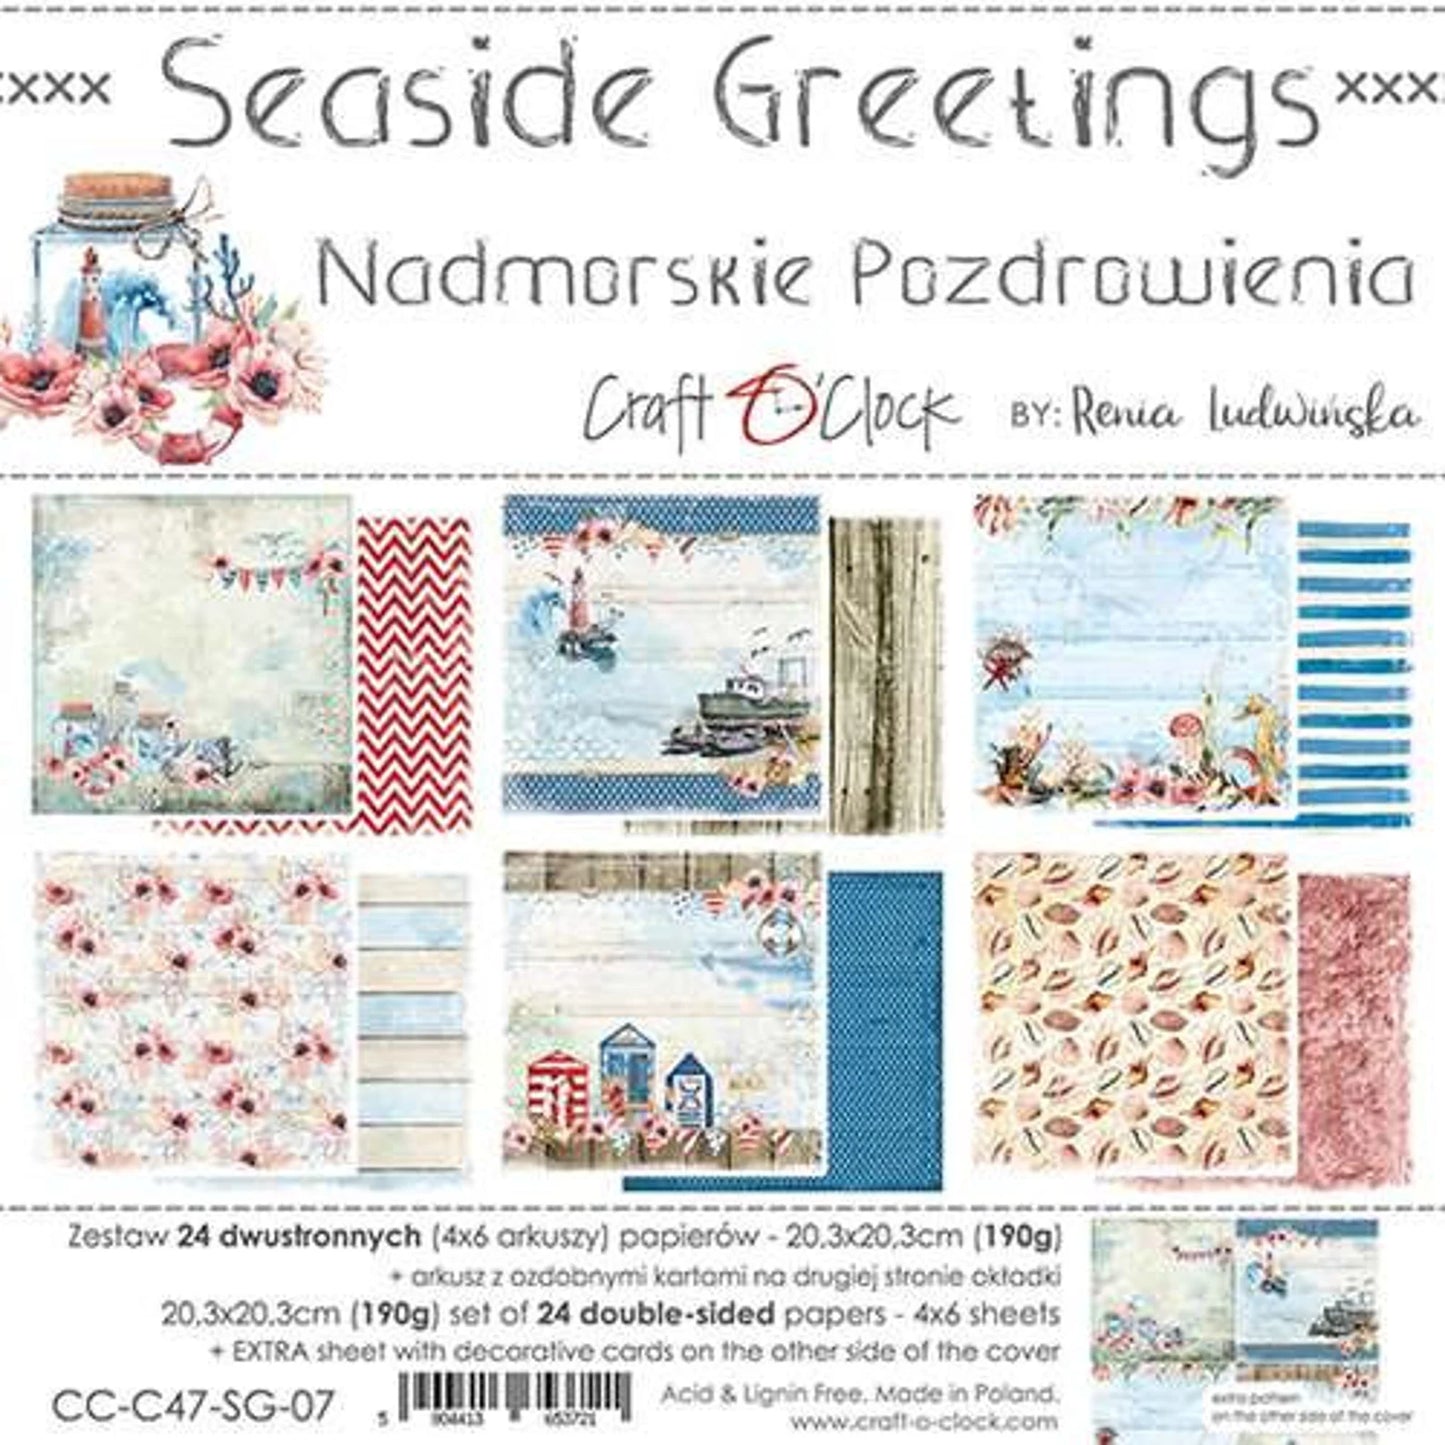 Craft o' Clock Seaside greetings paper set